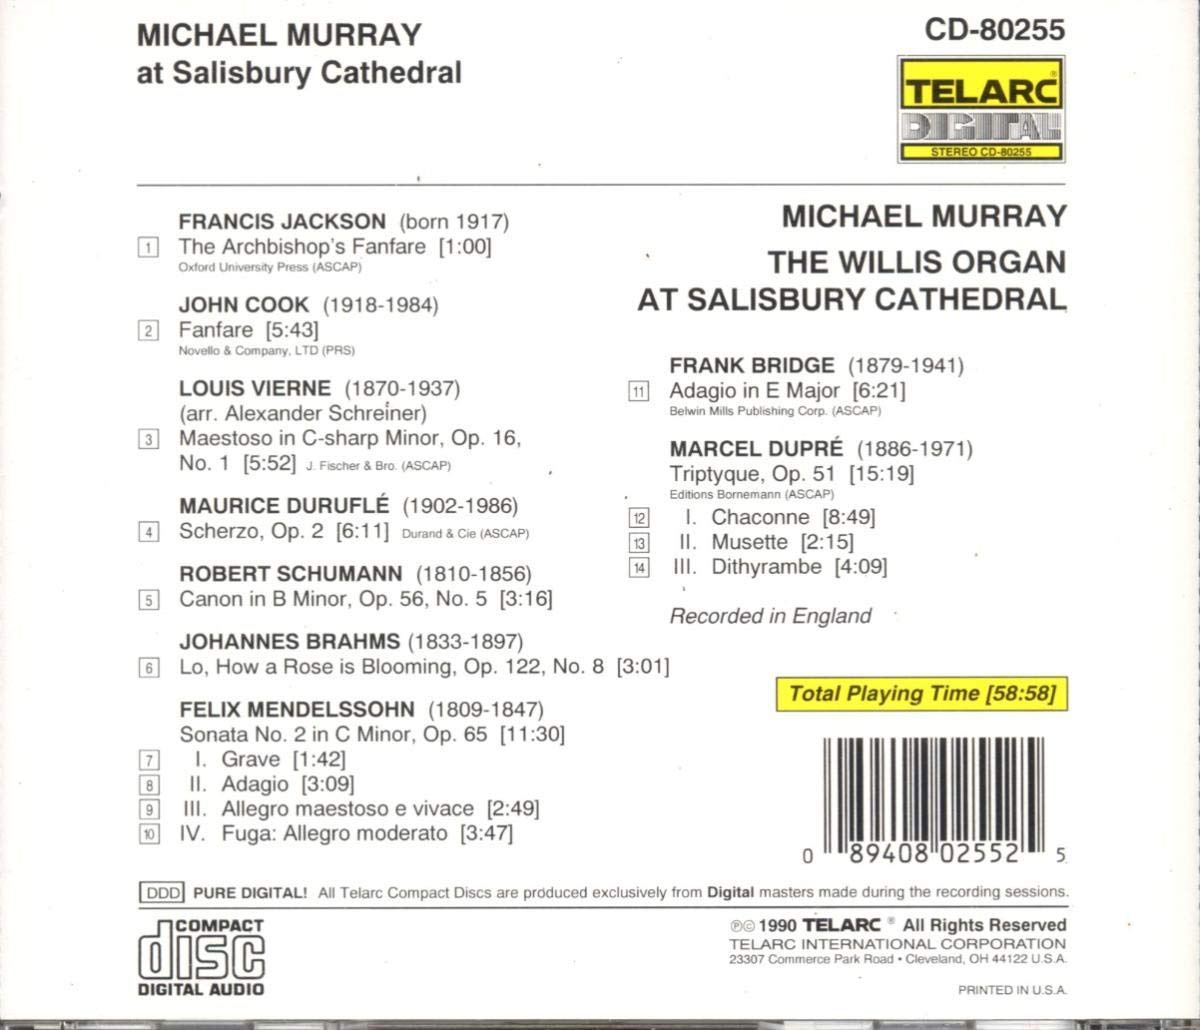 MICHAEL MURRAY: THE WILLIS ORGAN AT SALISBURY CATHEDRAL